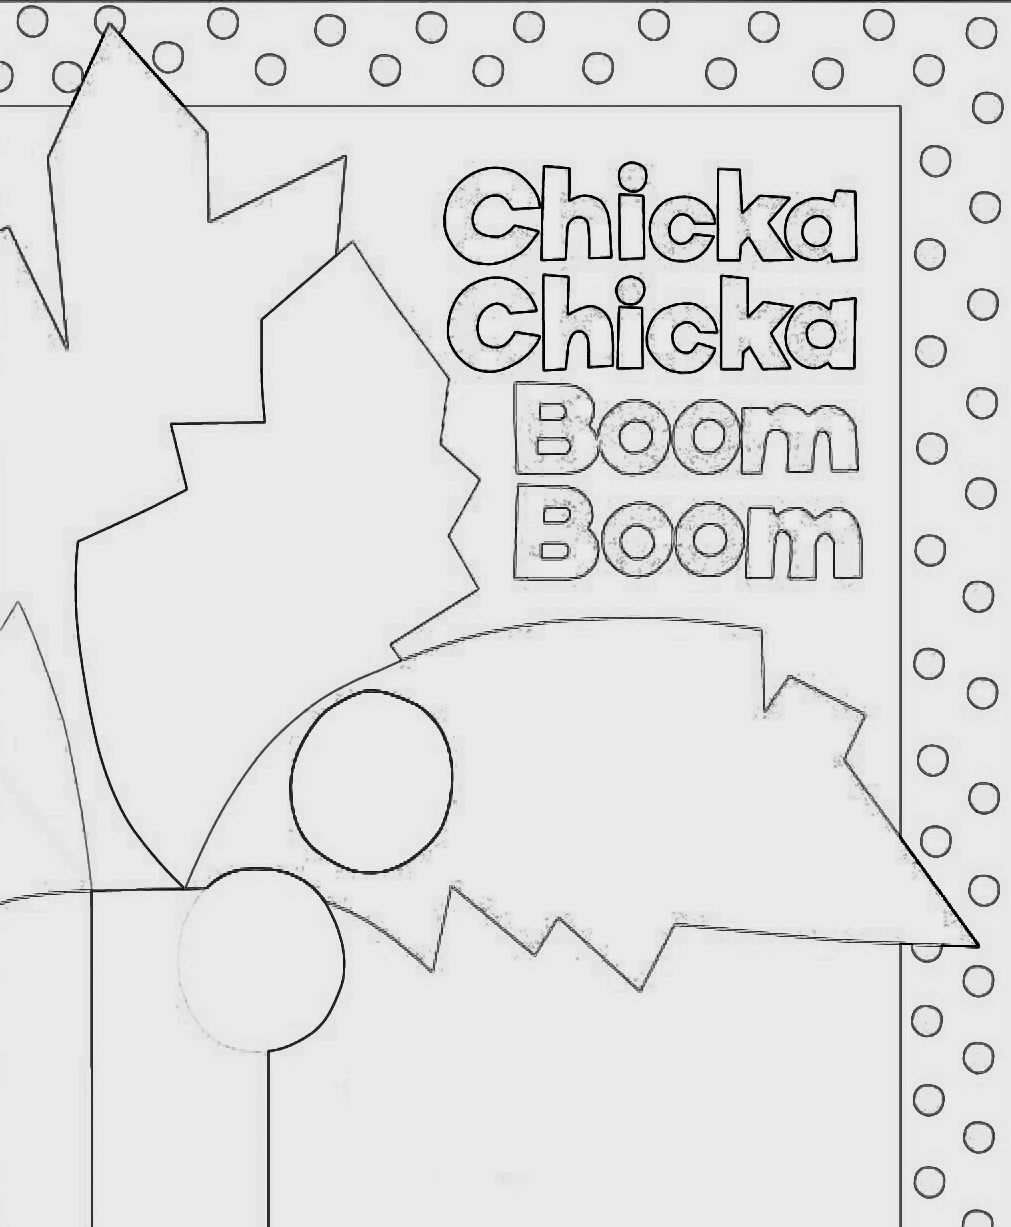 Chicka Chicka Boom Boom Coloring Pages
 Chicka Chicka Boom Boom Coloring Pages Coloring Home